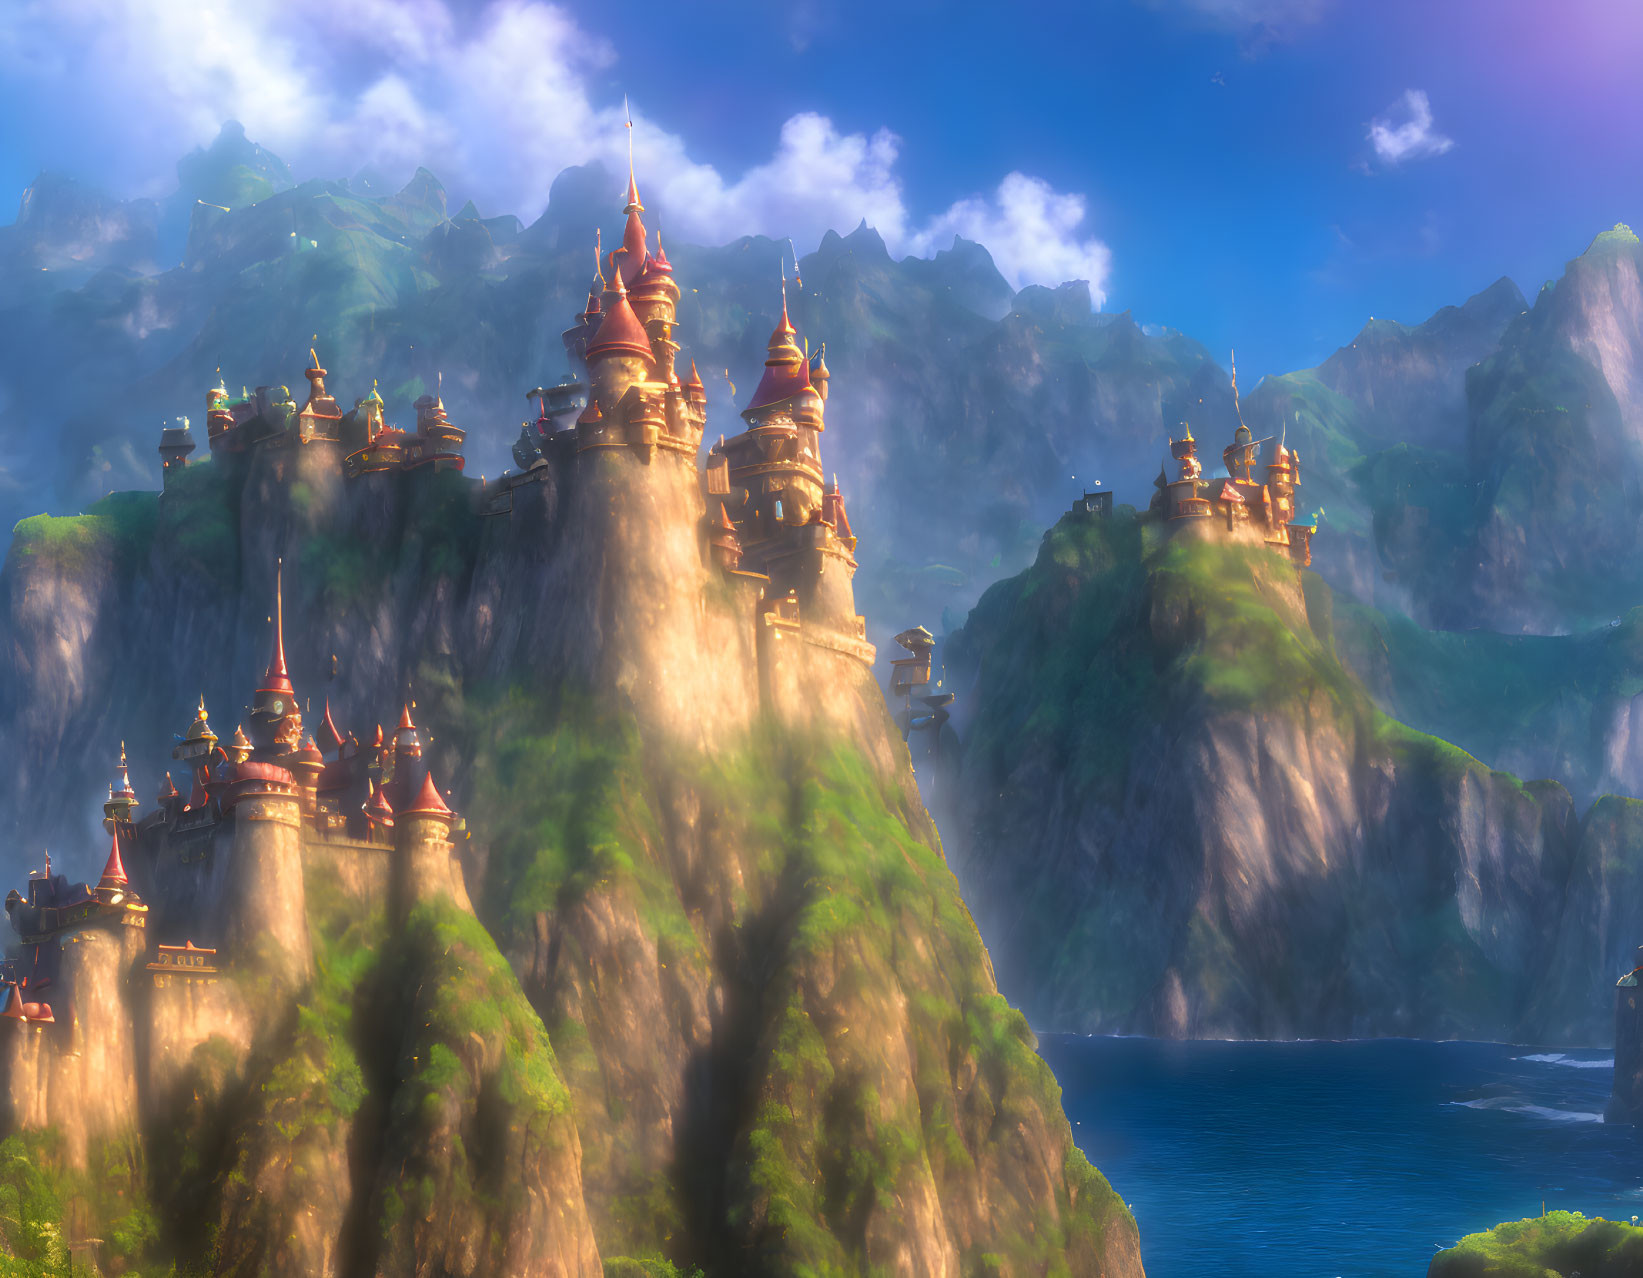 Fantastical coastal landscape with glowing castles on lush cliffs